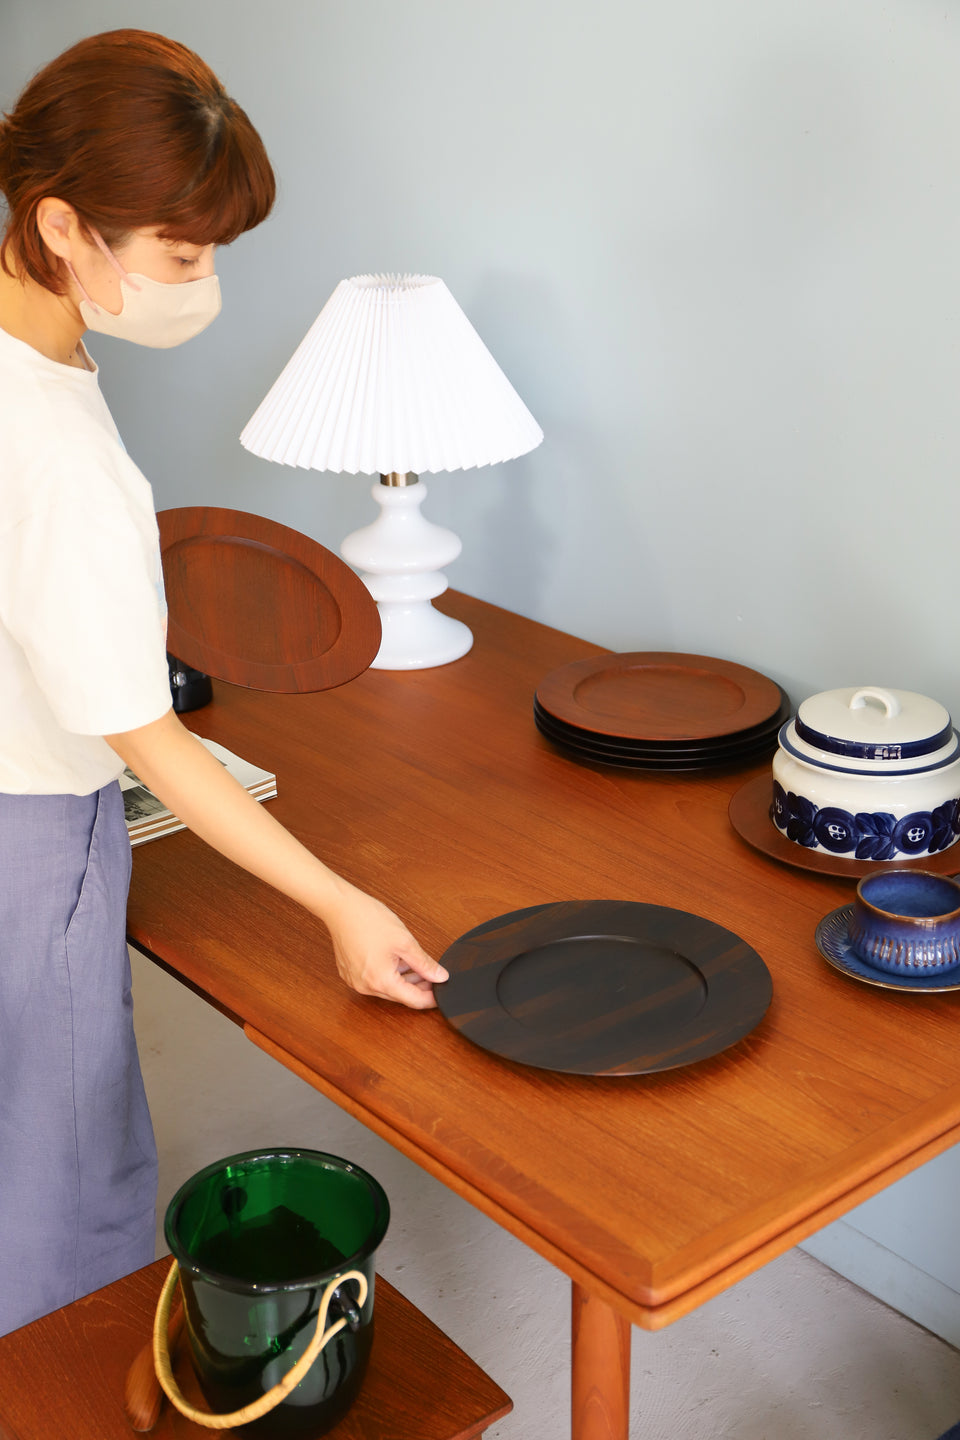 Danish Vintage Wooden Plate Round Tray/デンマークヴィンテージ 木製プレート トレイ チーク材 ローズウッド材 北欧雑貨